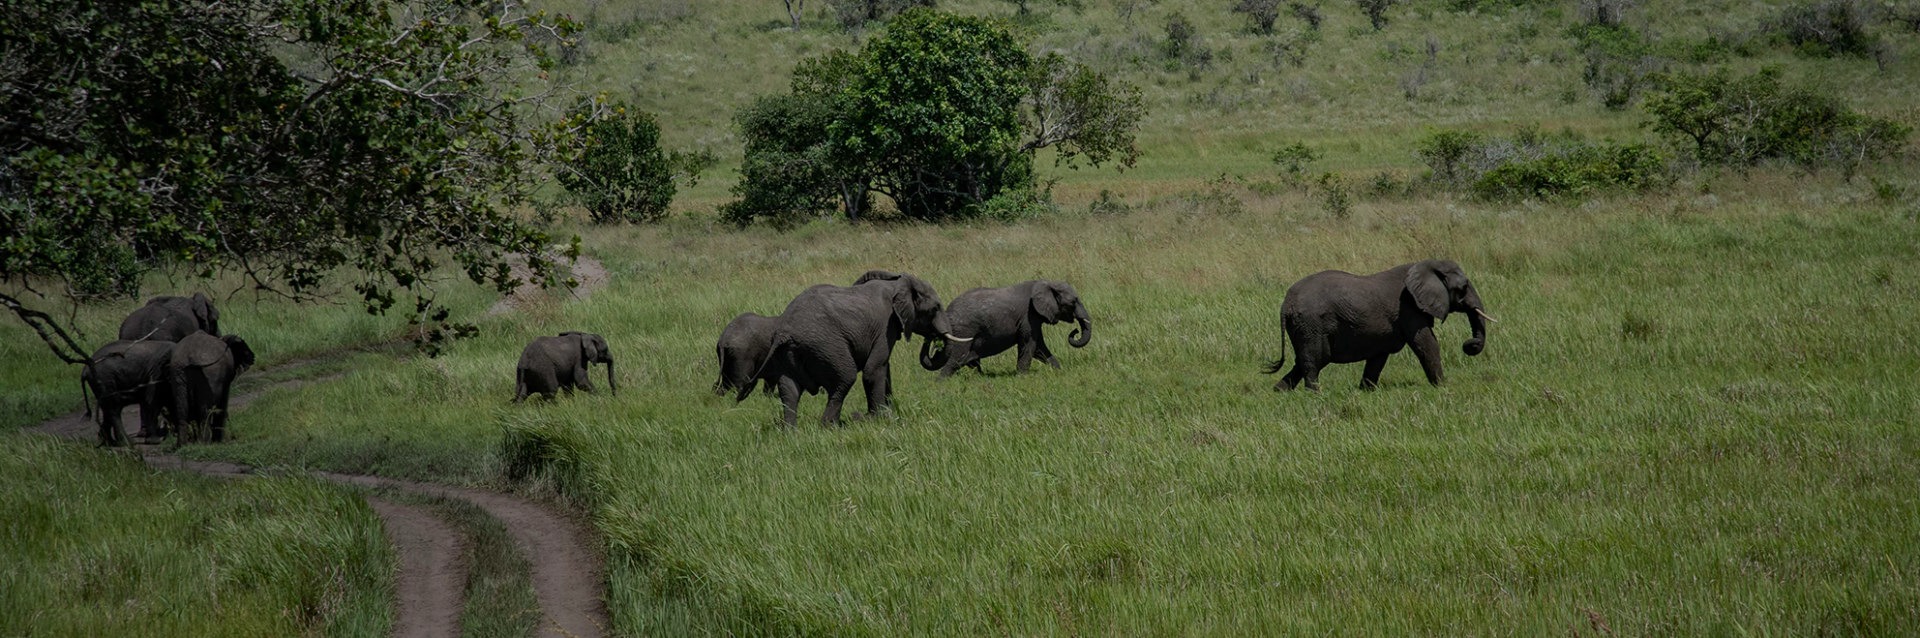 a herd of elephants going through the bush